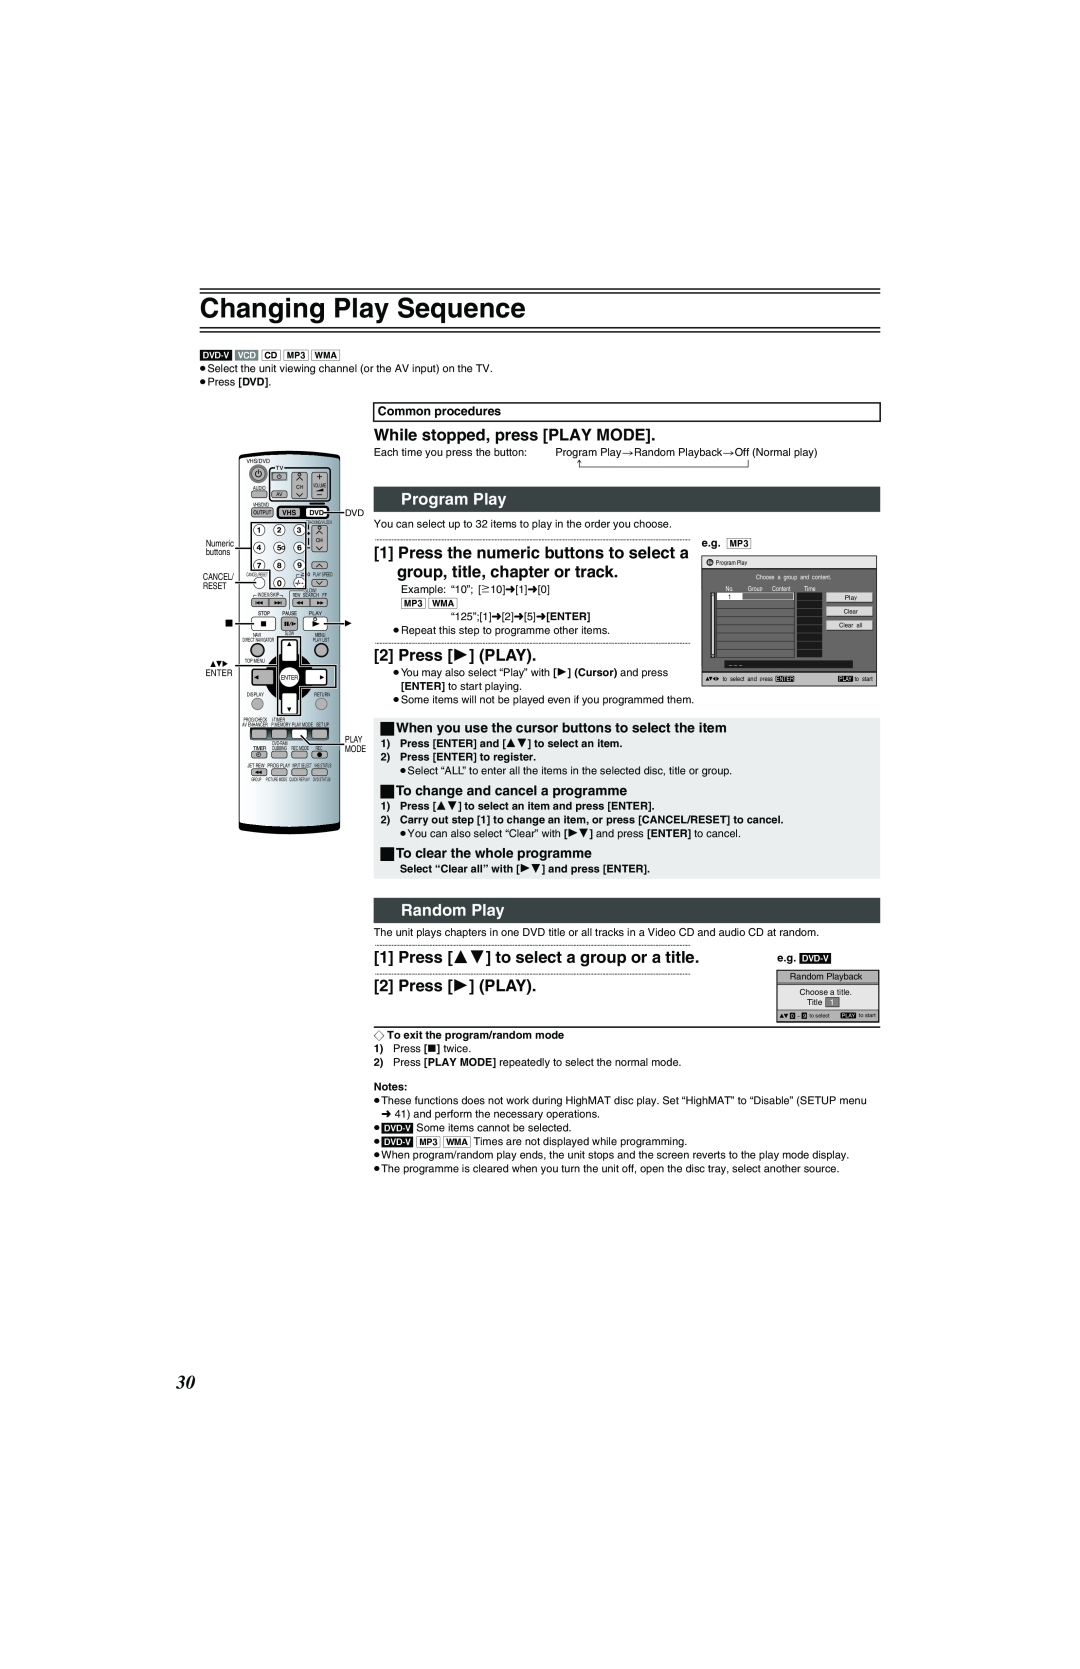 Panasonic NV-VP32 Series Changing Play Sequence, While stopped, press PLAY MODE, Program Play, Press 1 PLAY, Random Play 